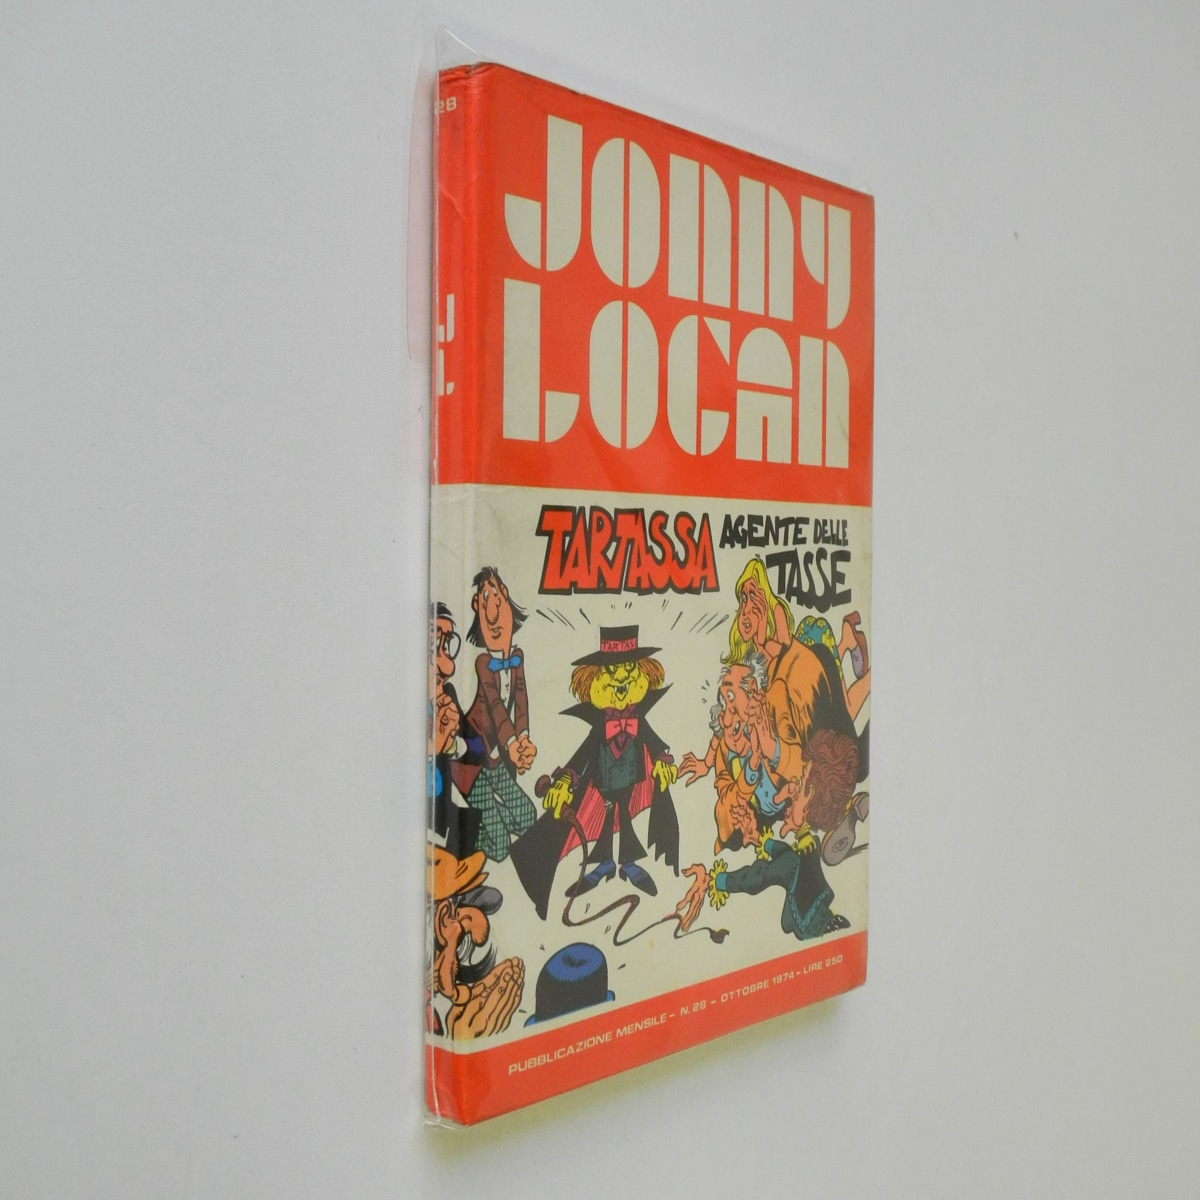 Jonny Logan n. 28 Dardo